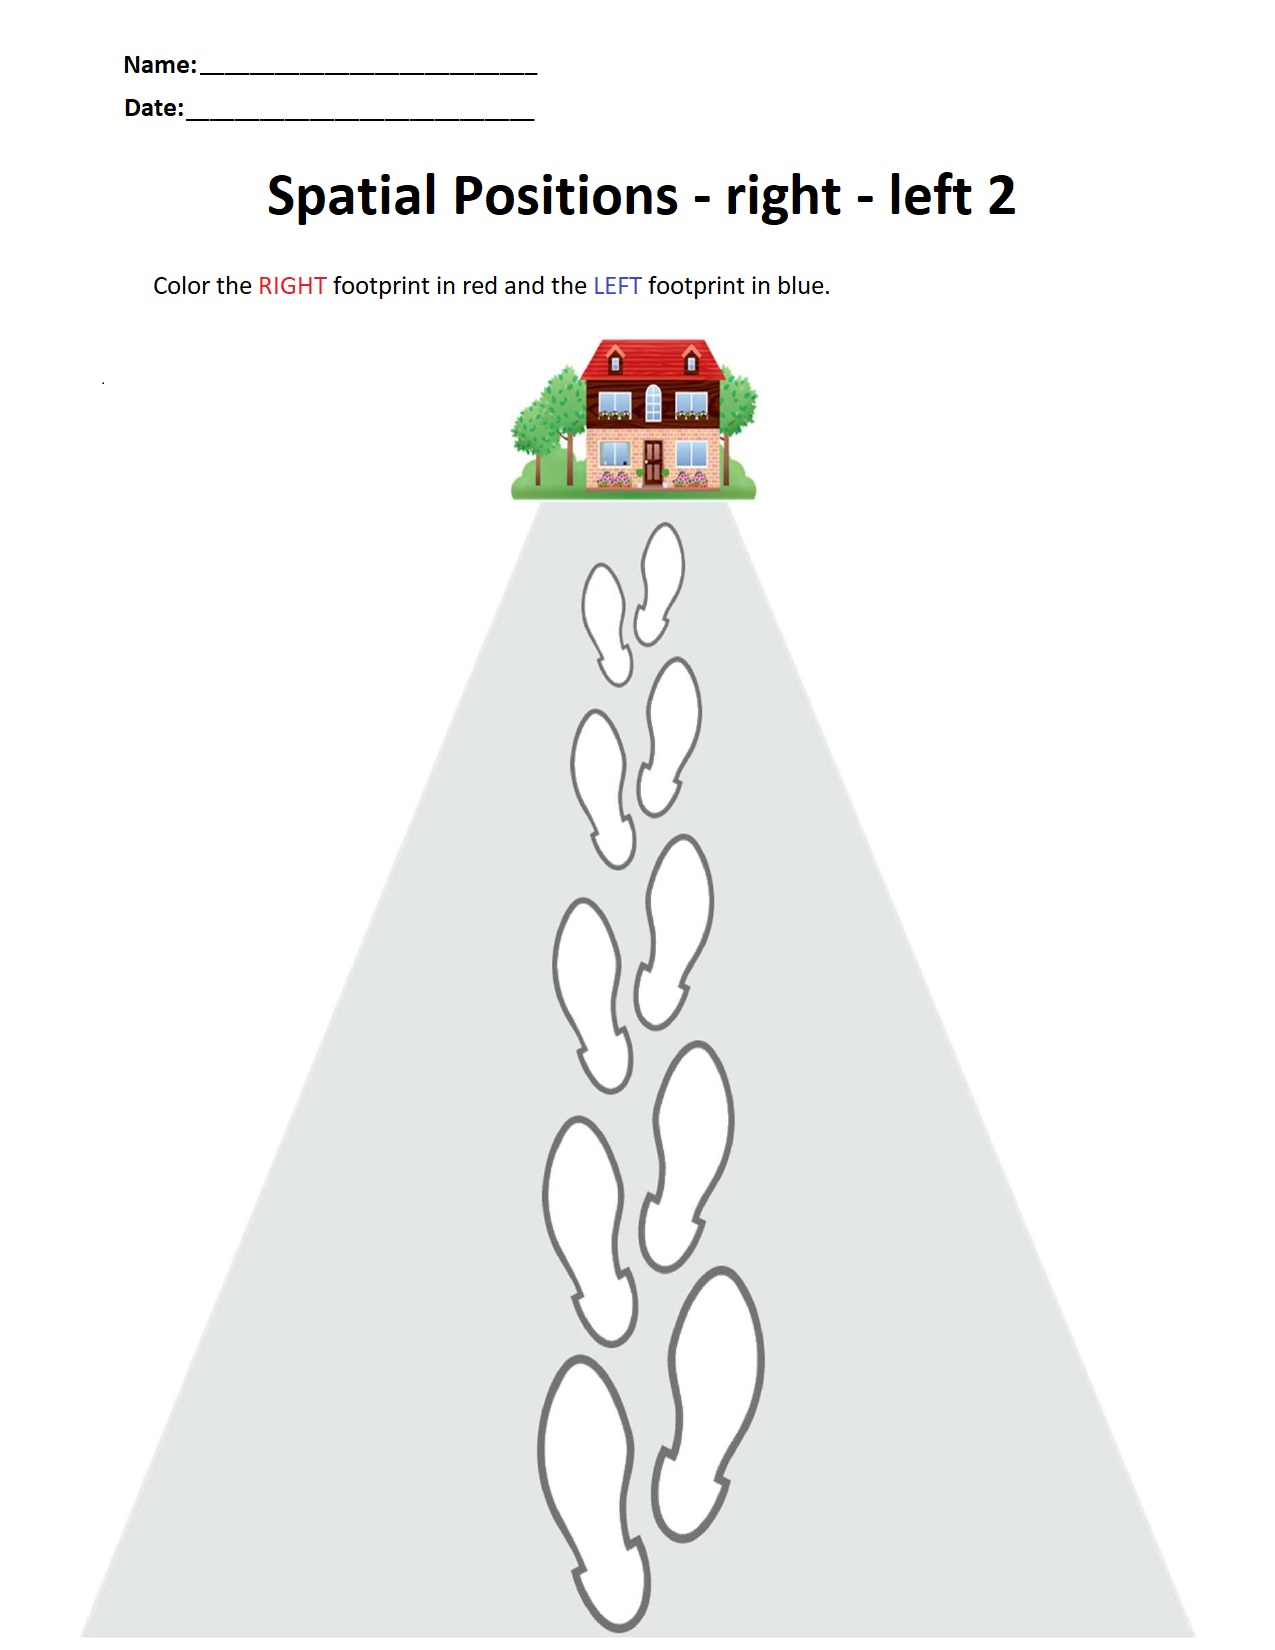 Spatial Positions - right - left 2.jpg